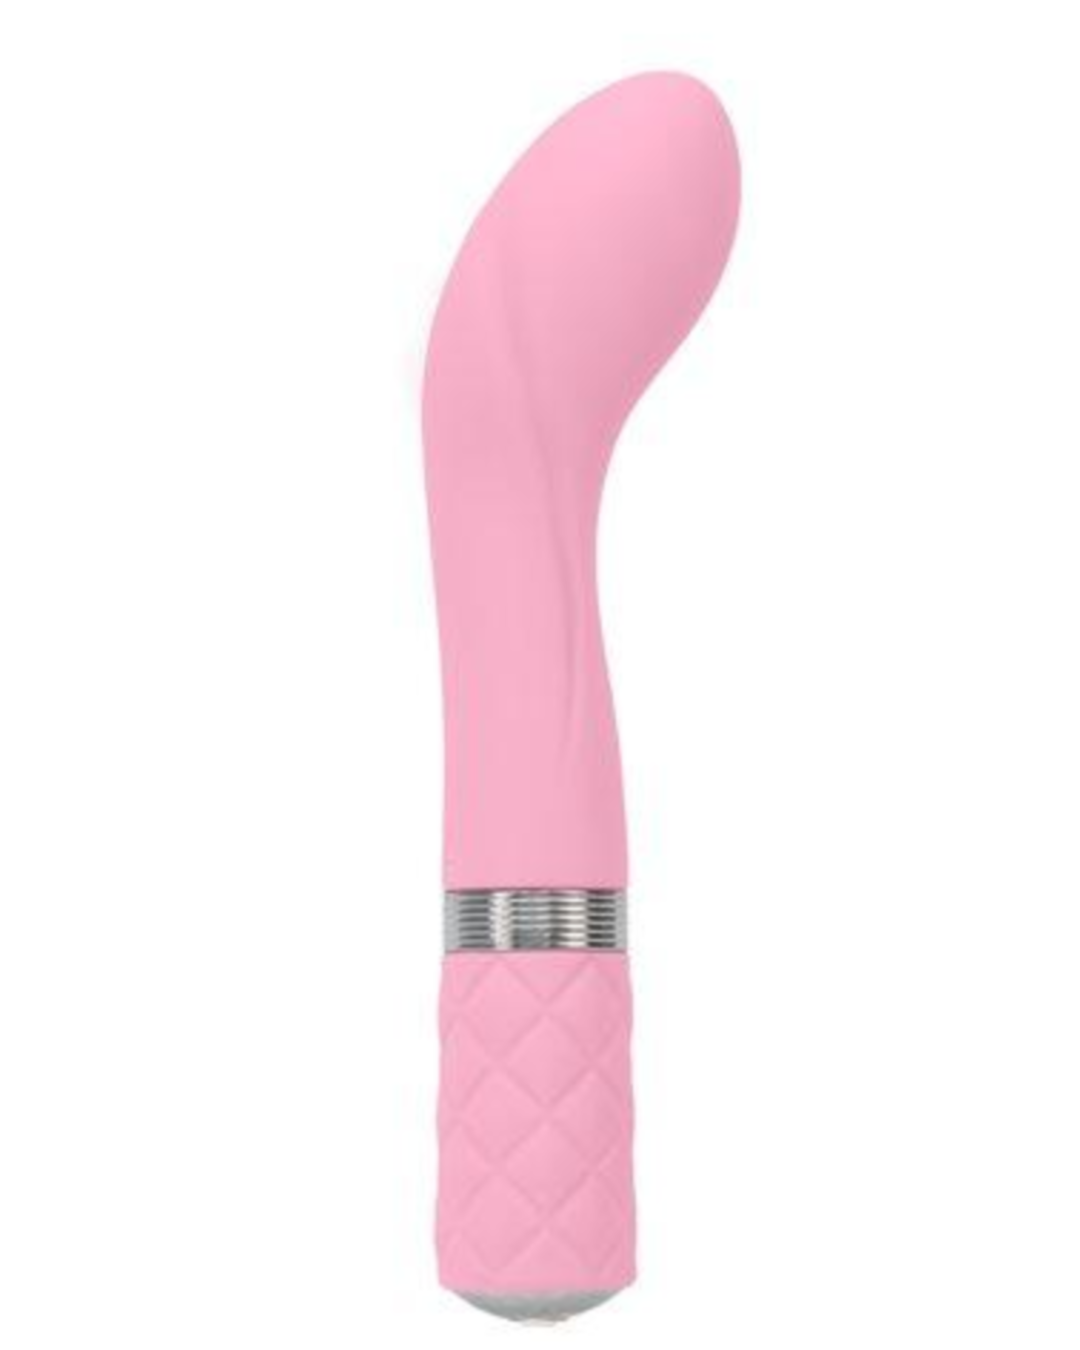 Pillow Talk Sassy G-spot Vibrator by BMS - Pink